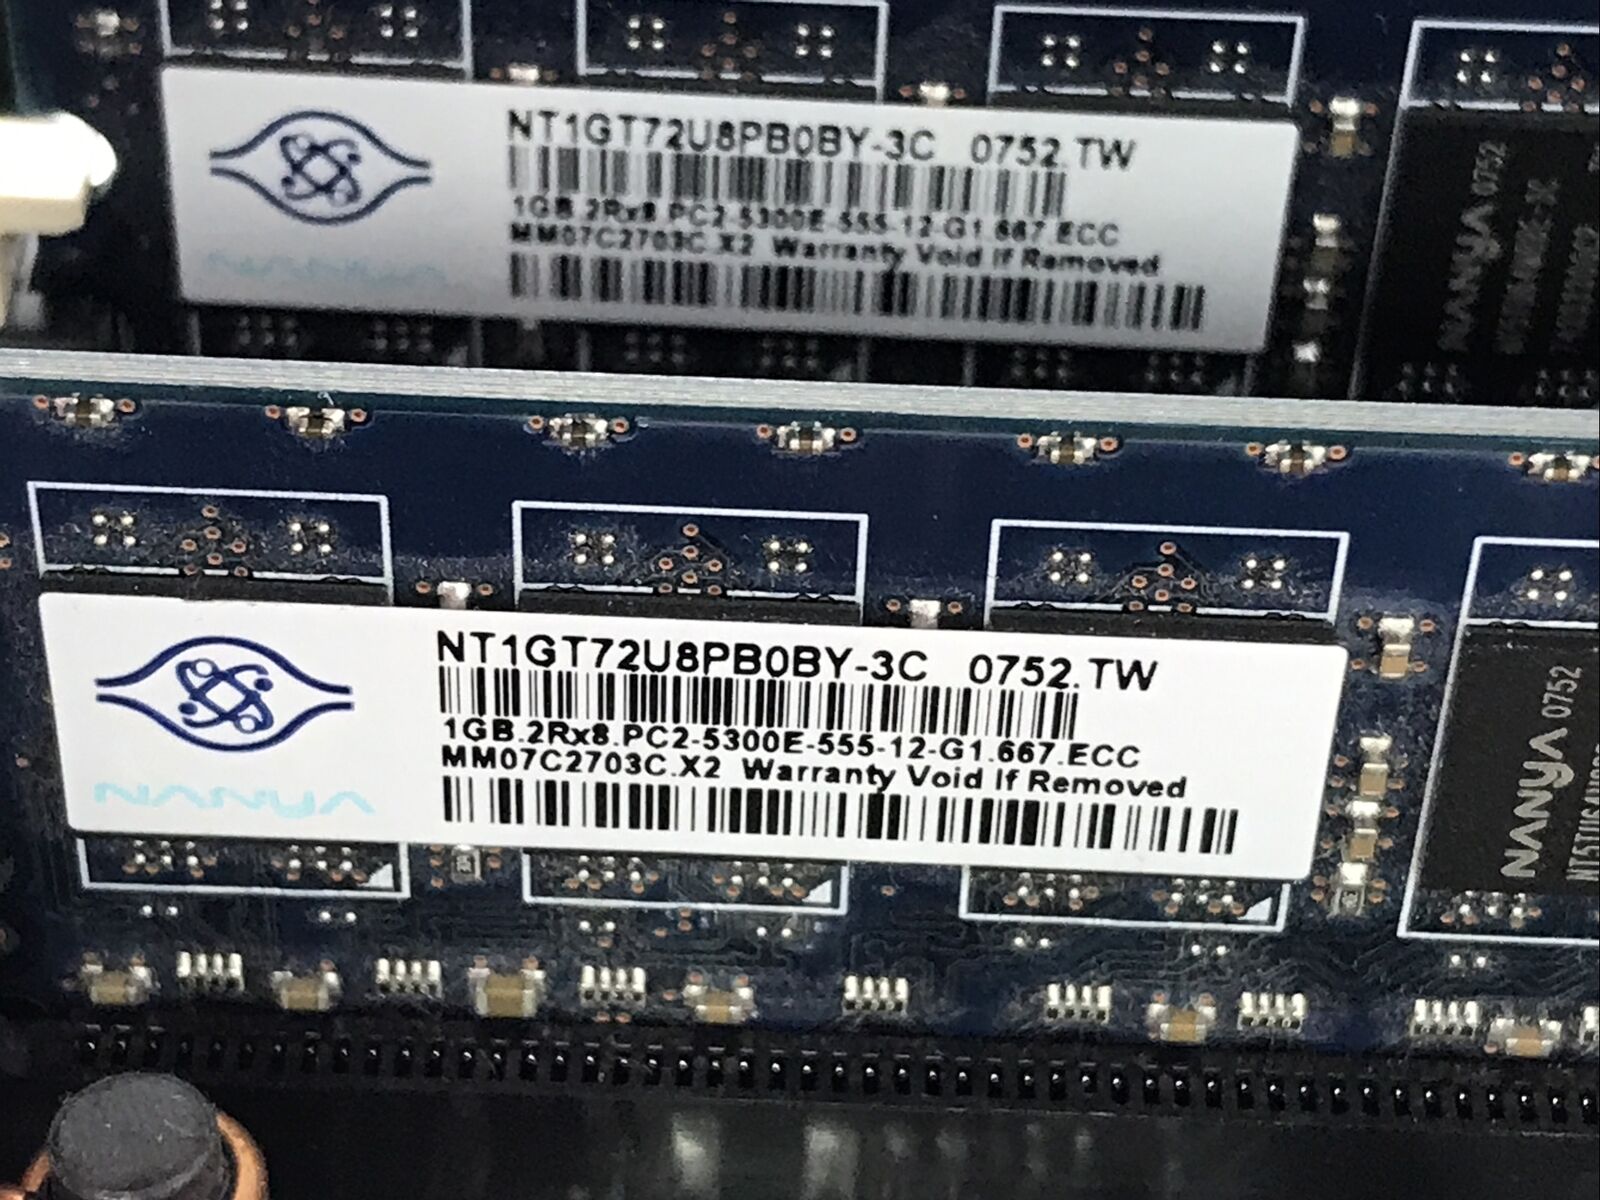 INTEL D66165-501 Intel Celeron D 3.33GHZ CPU 2GB RAM Mother Board + I/o Cover